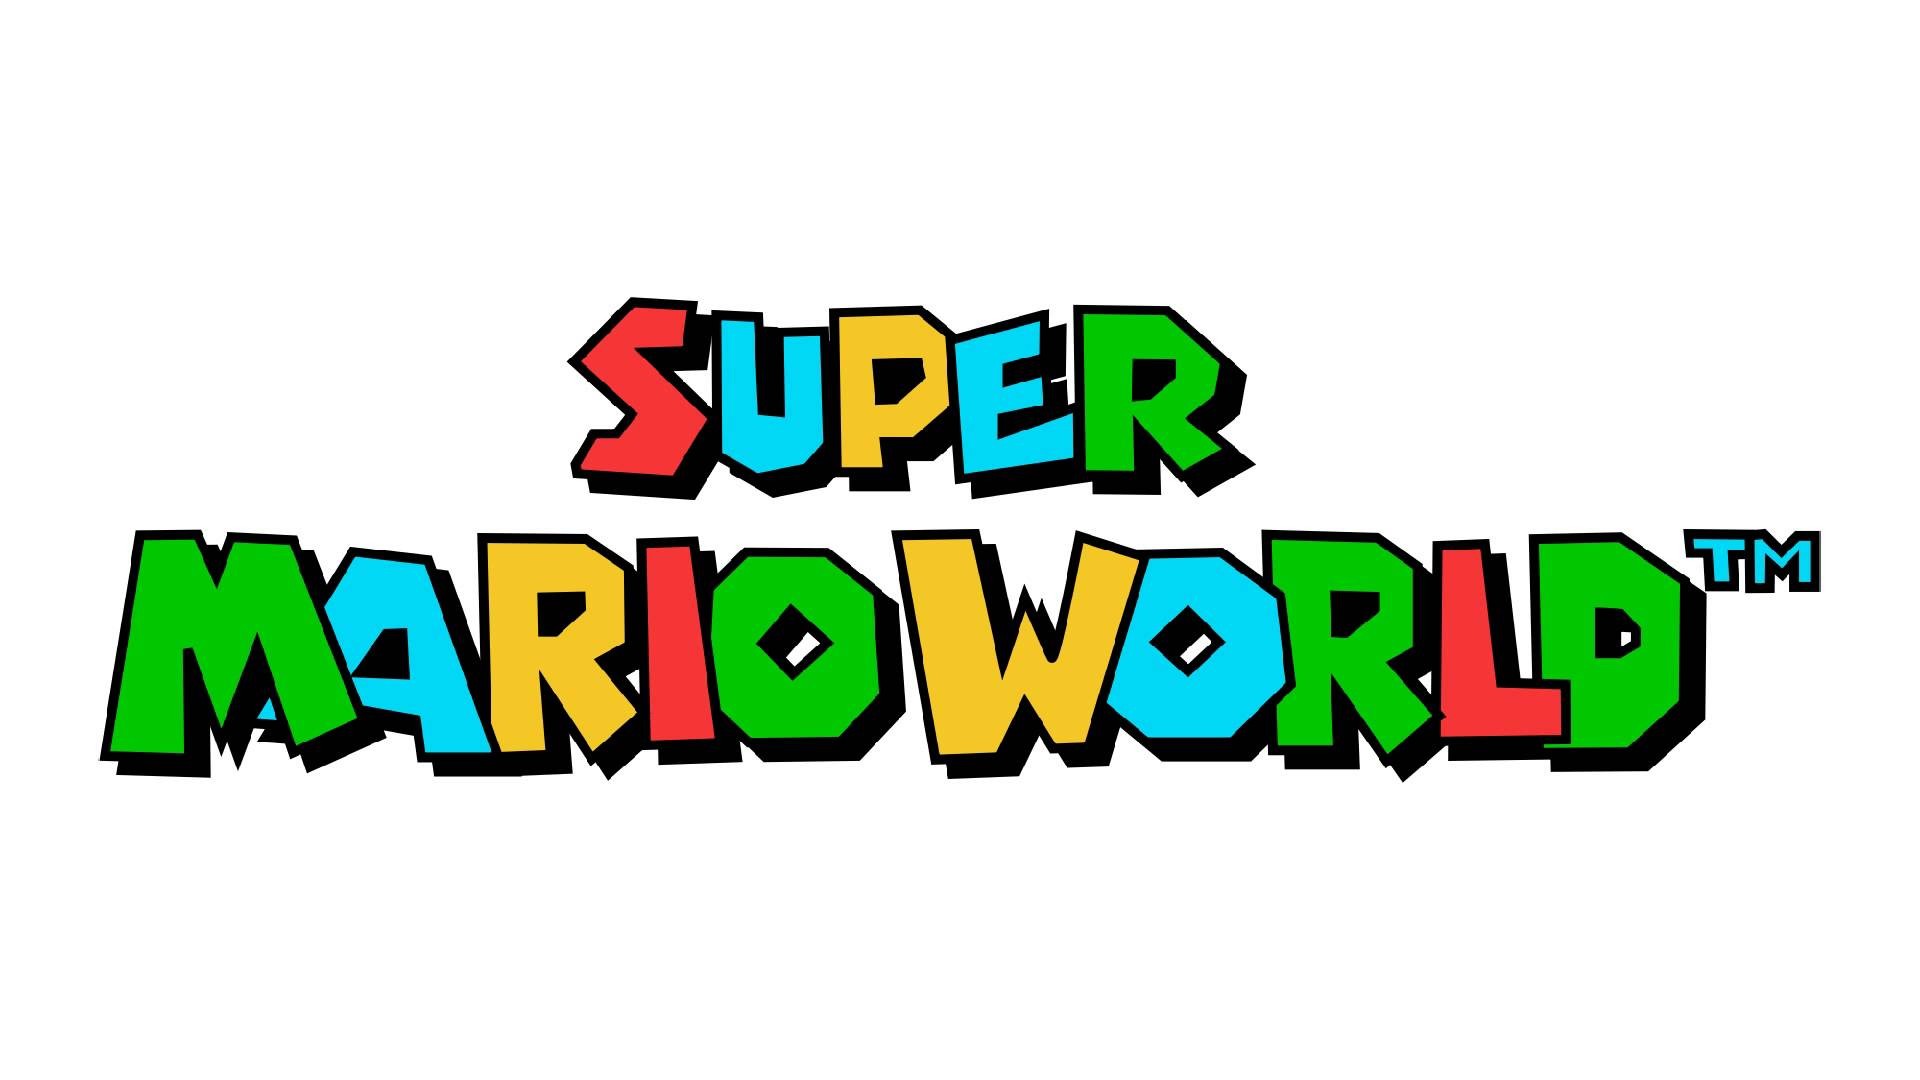 Super mario world. Шрифт в стиле супер Марио. Супер Марио лого. Супер игра надпись.